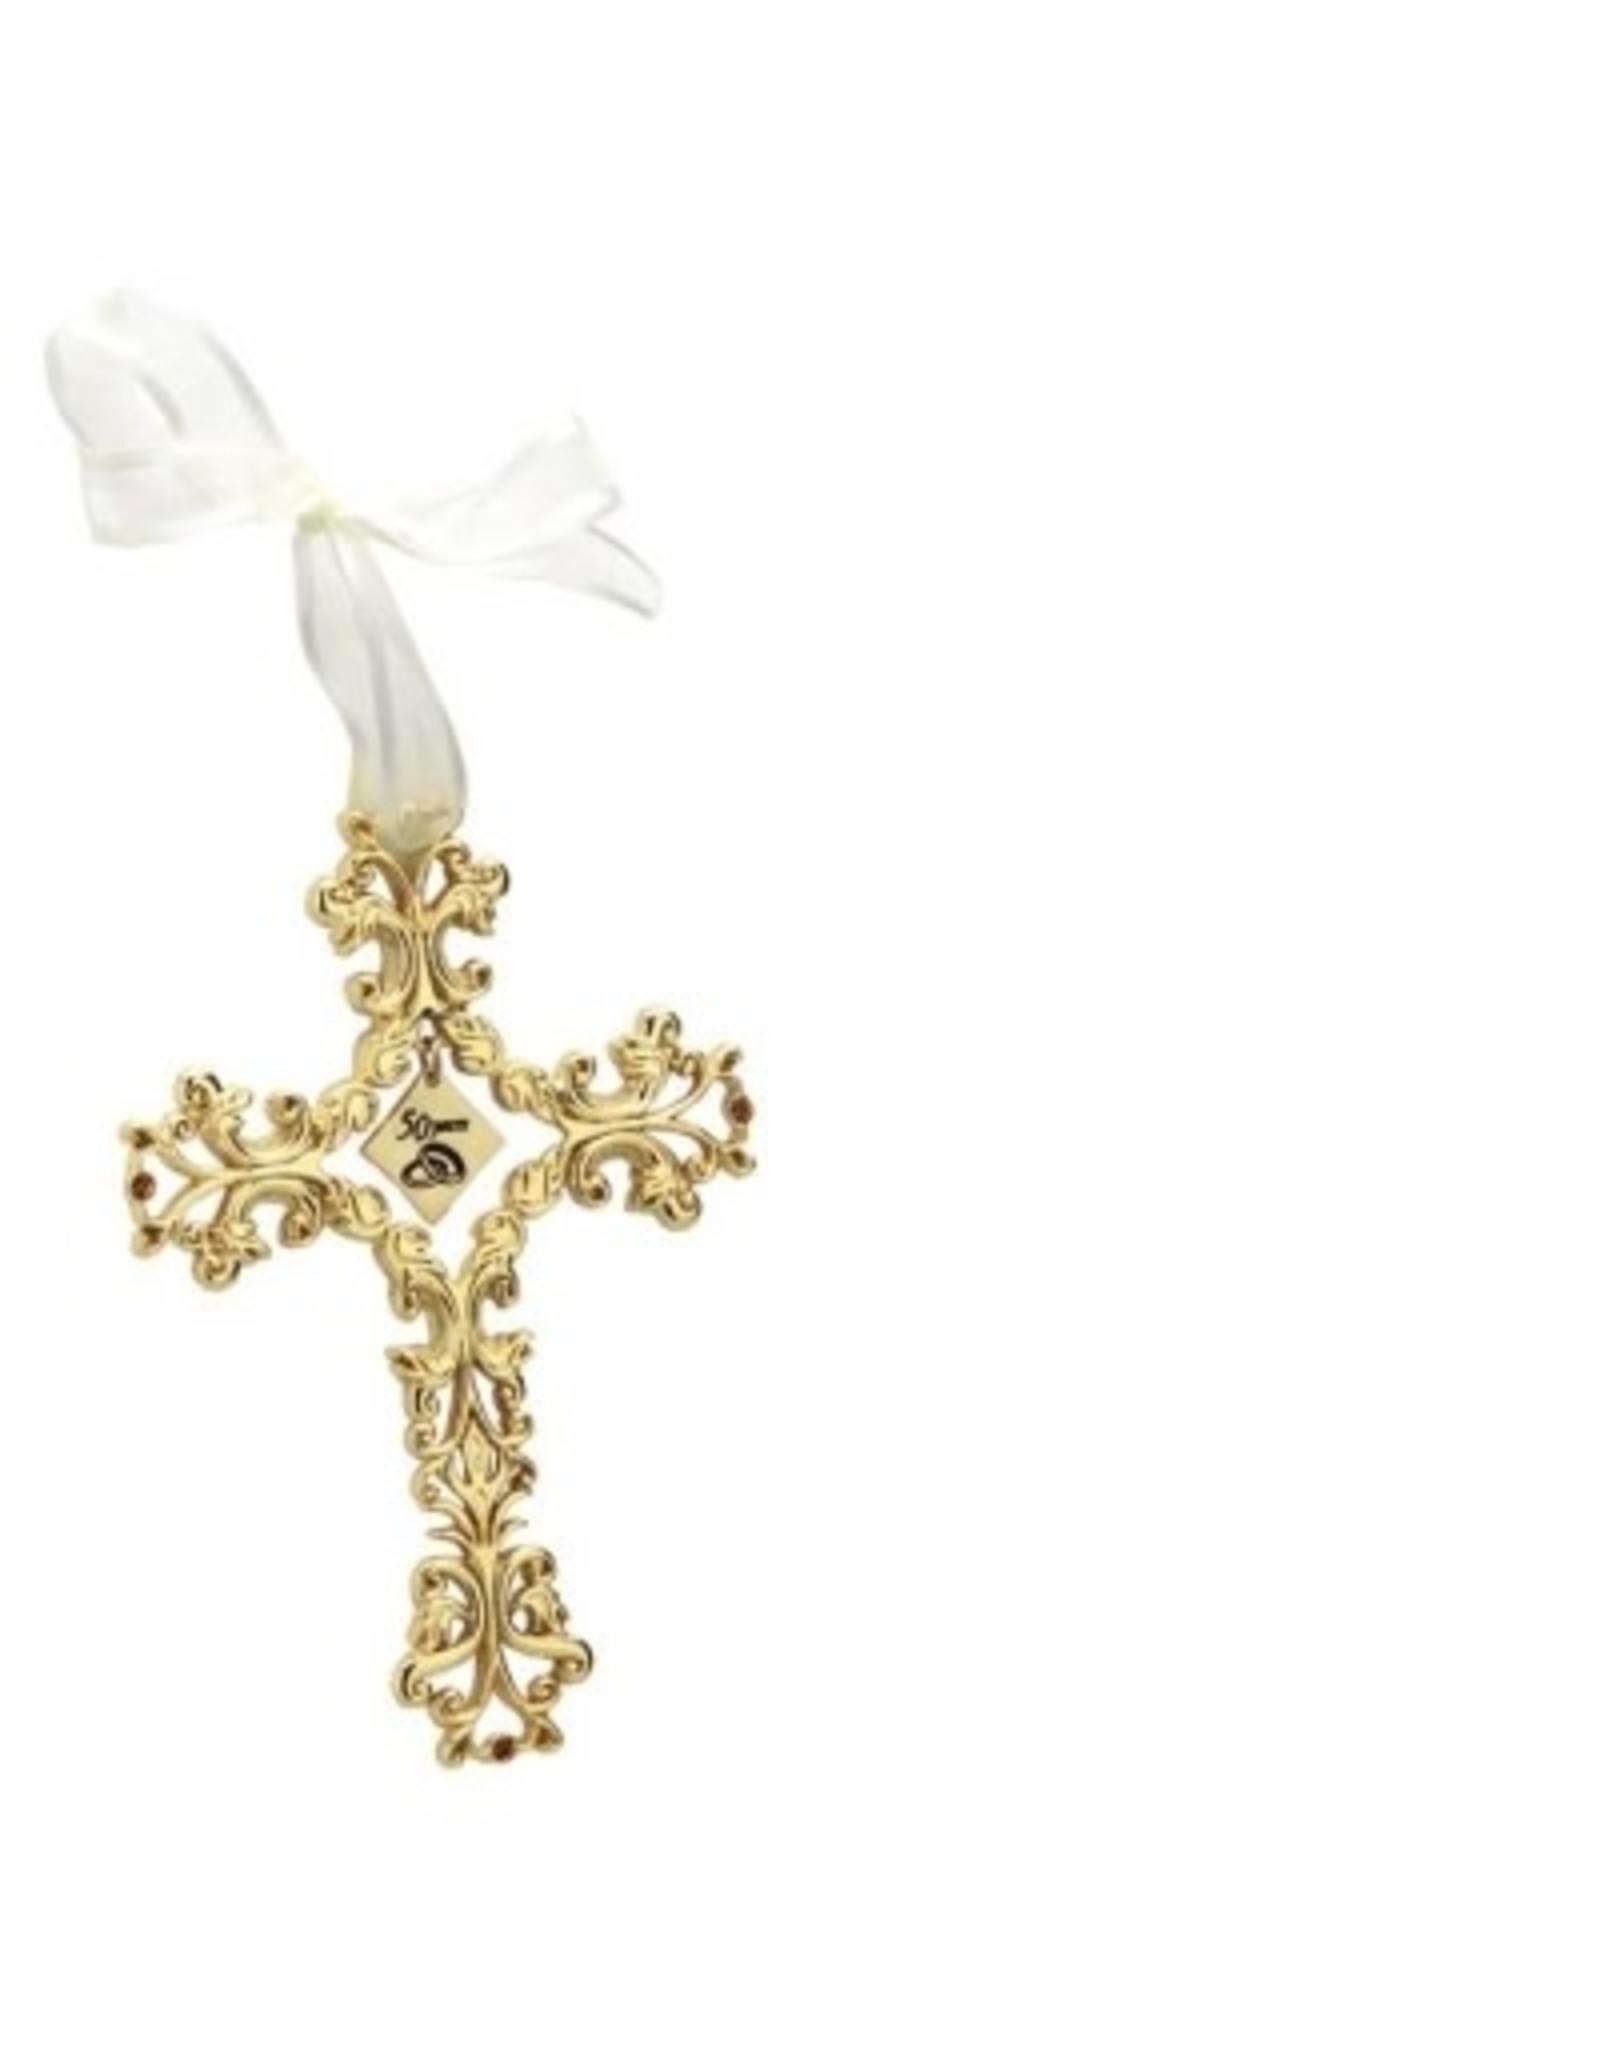 Abbey & CA Gift Cross - 50th Anniversary, Gold Filigree (5")